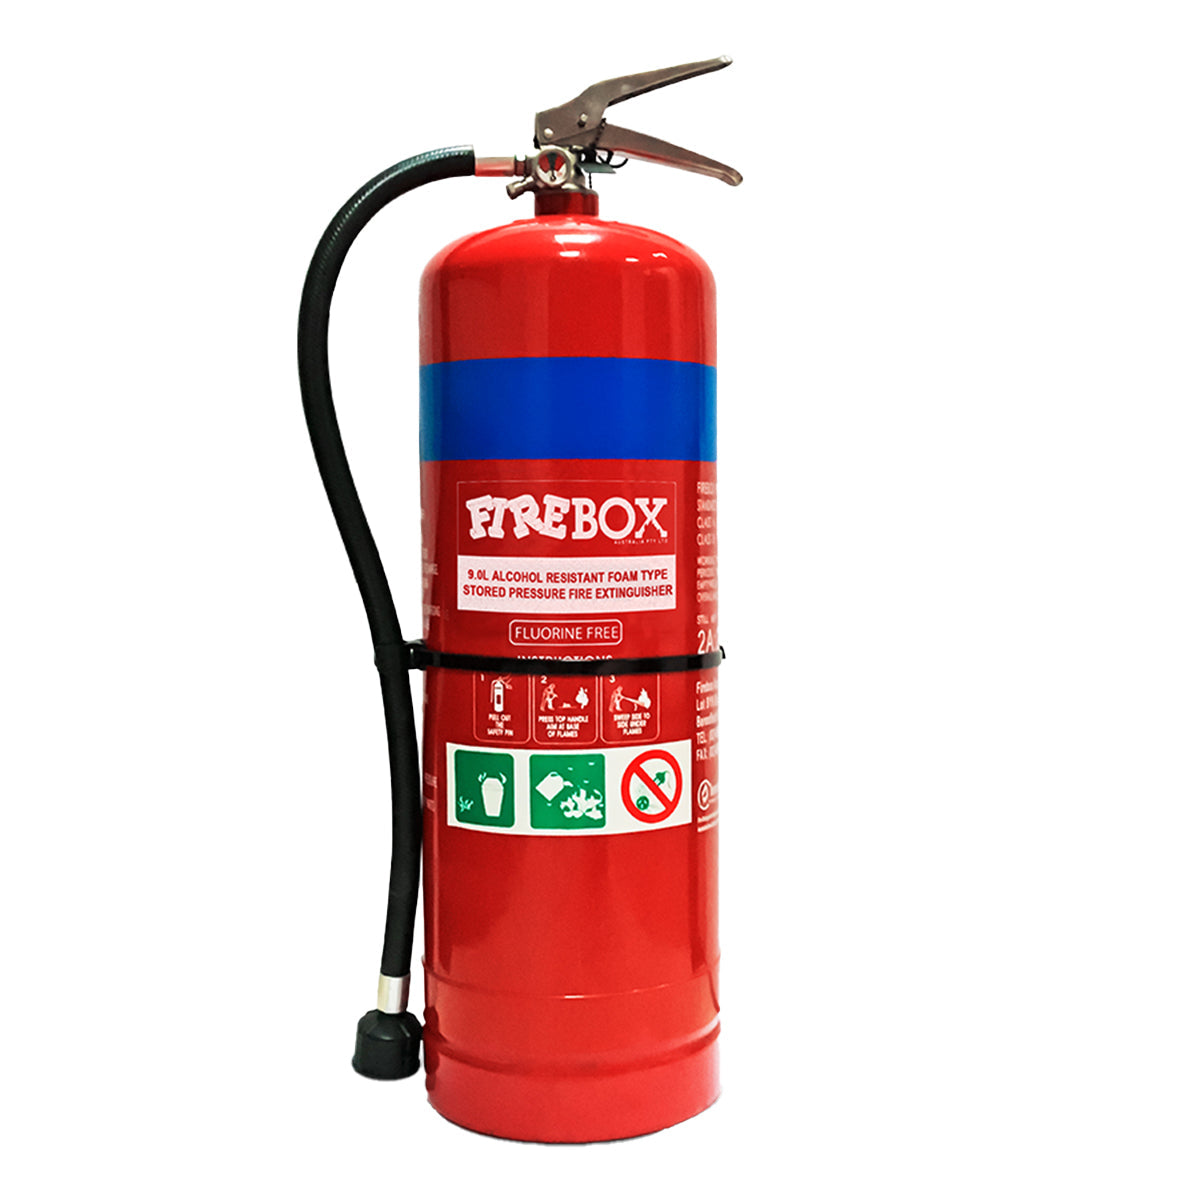 9lt Fluorine Free Alcohol Resistant Extinguisher - Premium Air Foam Extinguishers from Firebox - Shop now at Firebox Australia